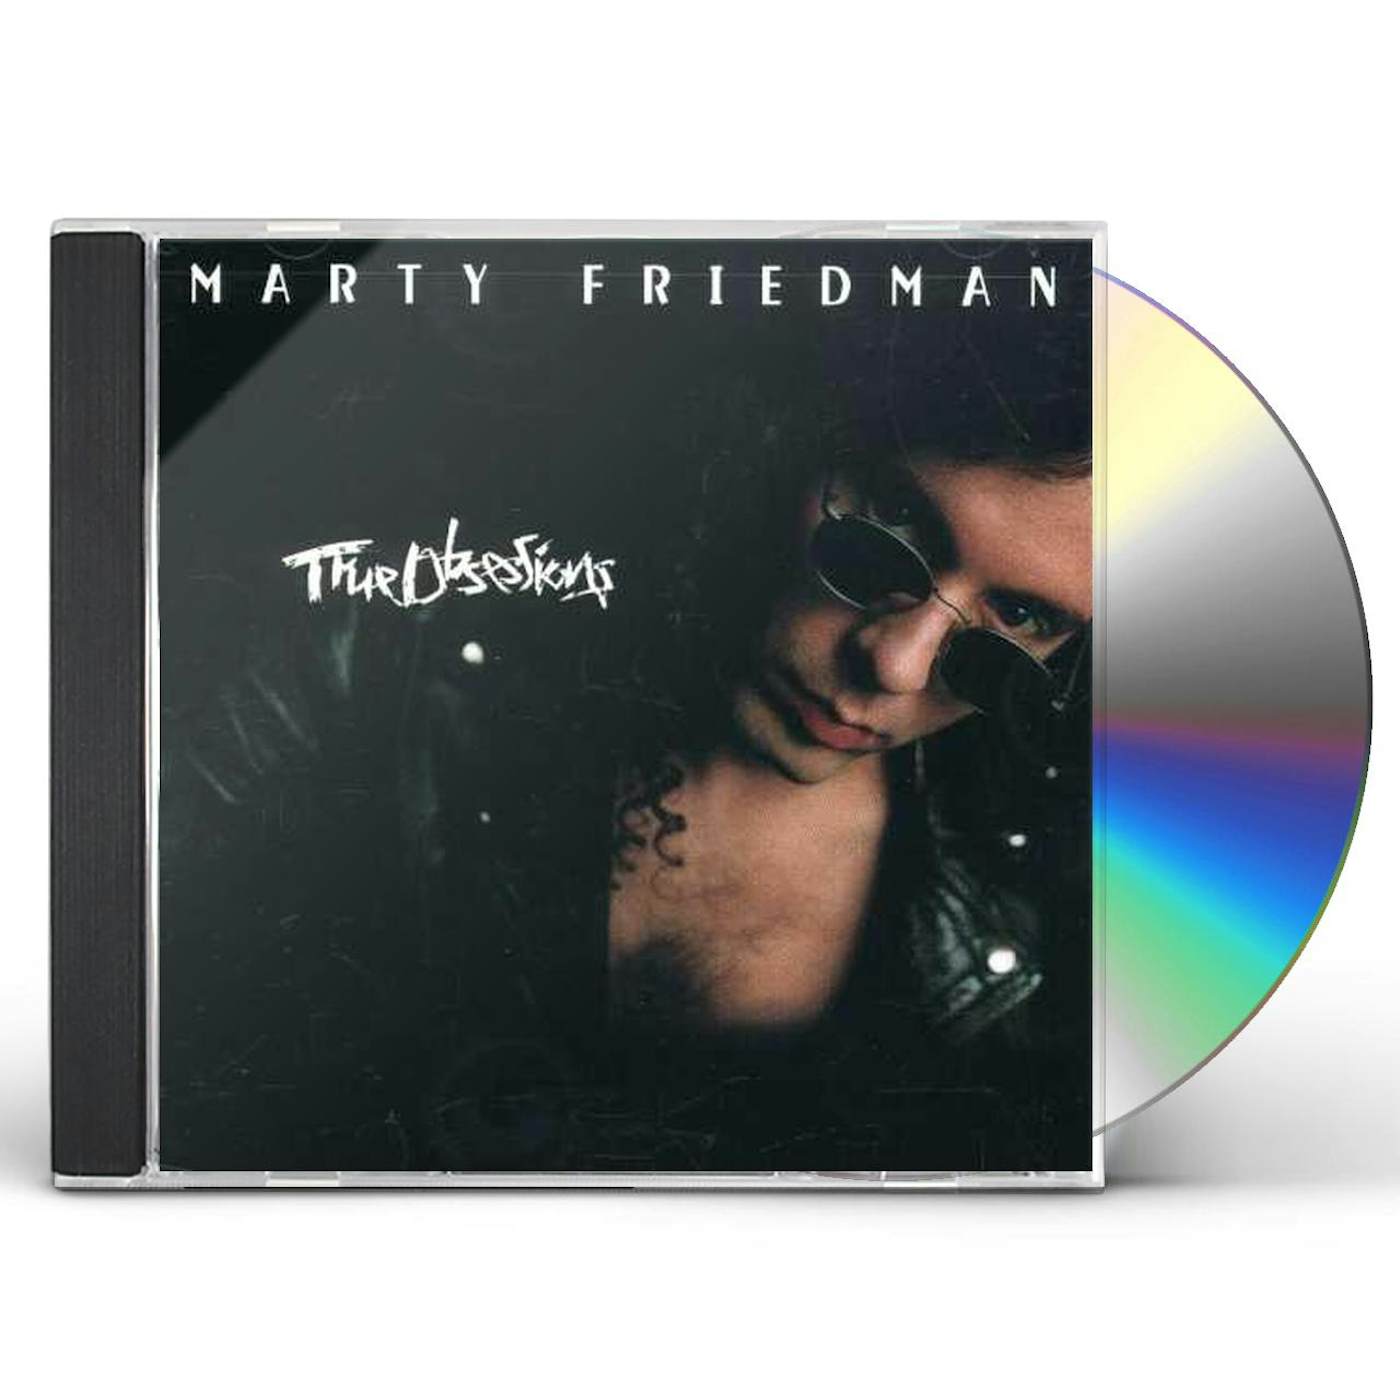 Marty Friedman TRUE OBSESSIONS CD